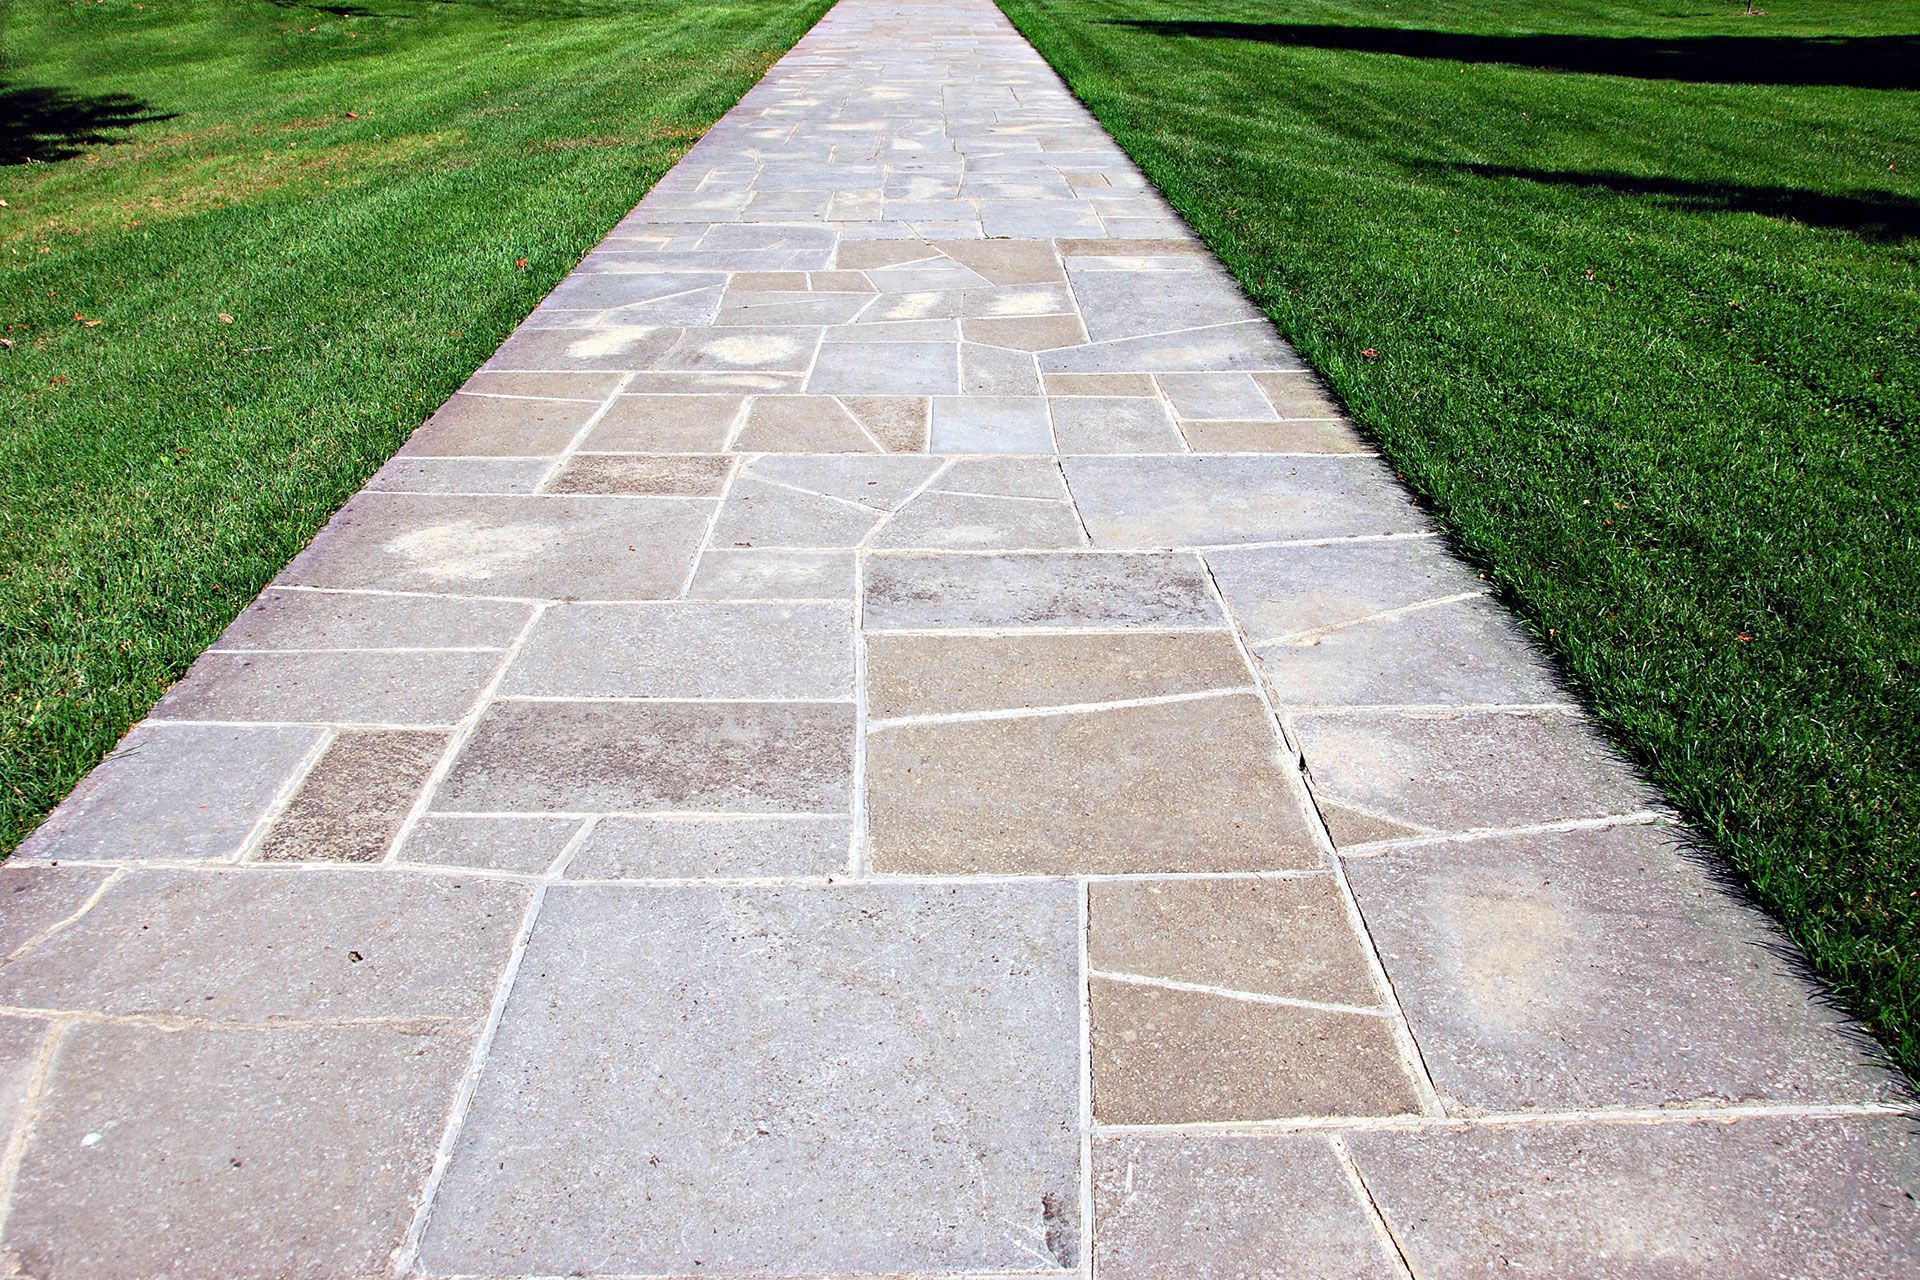 A stone walkway going through a lush green field